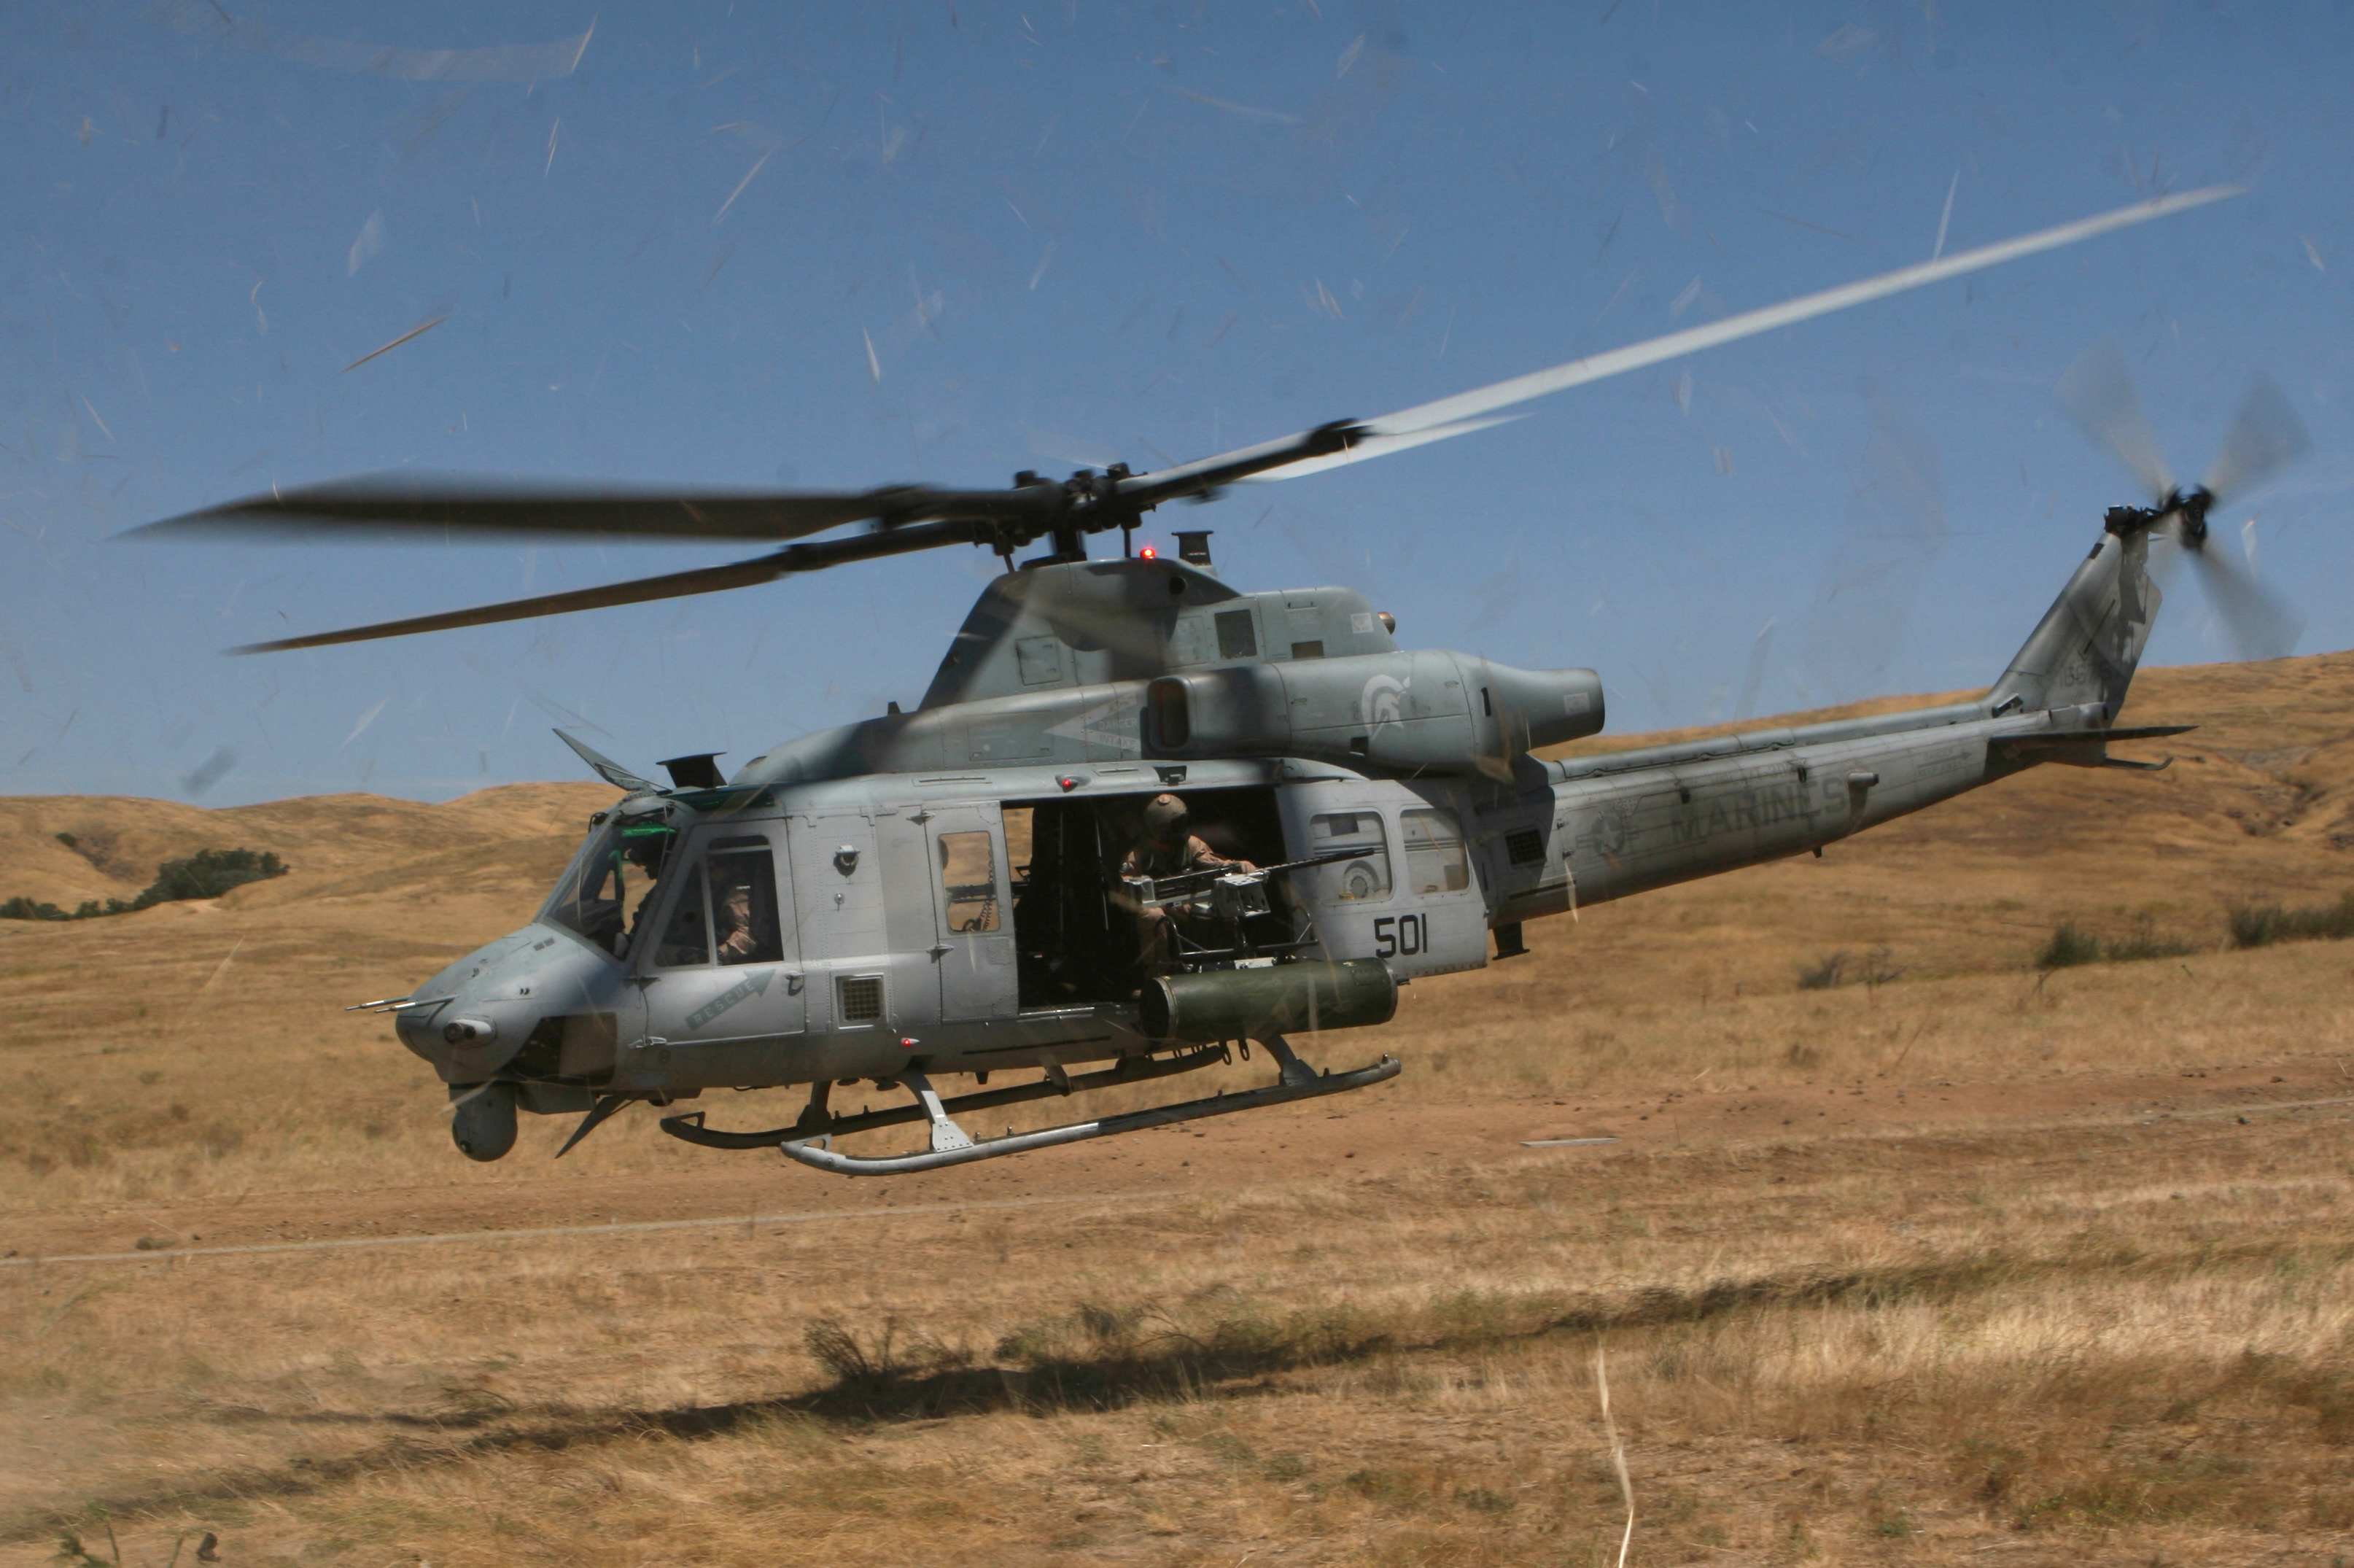 File:UH-1Y HMLAT-303 Camp Pendleton 2008.JPG - Wikimedia Commons